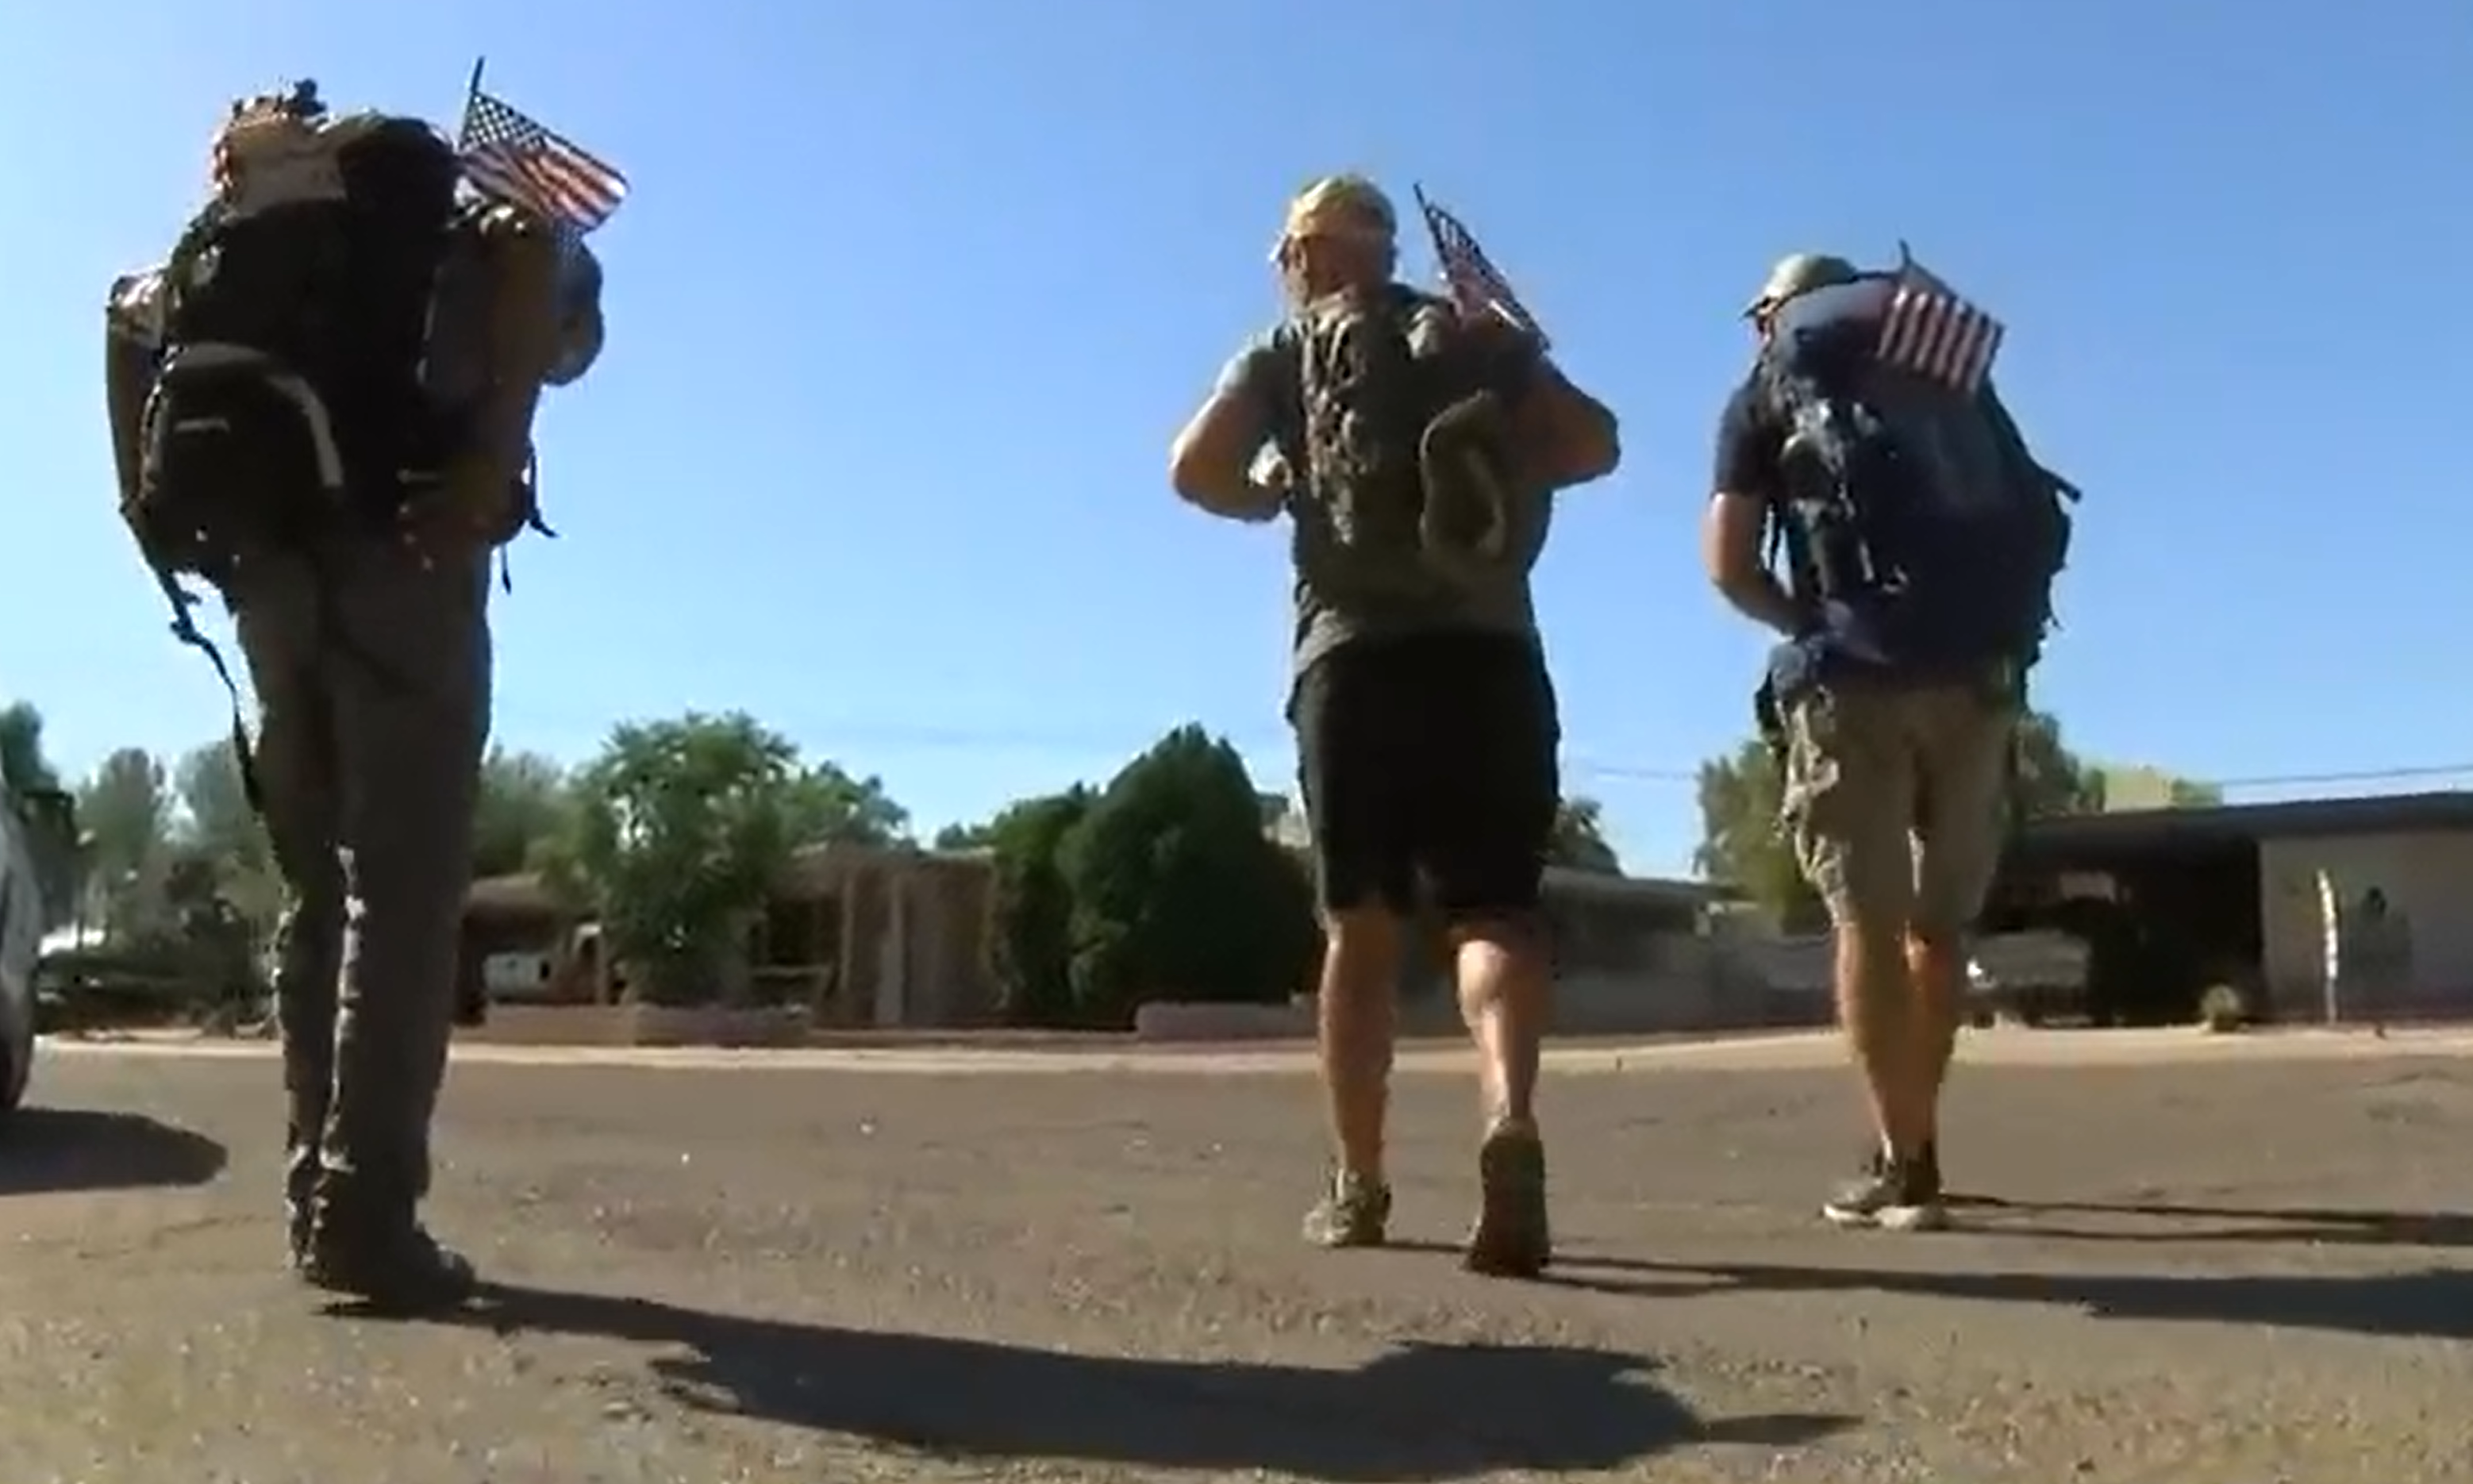 Three veterans trekking across country to raise awareness over veterans’ issues